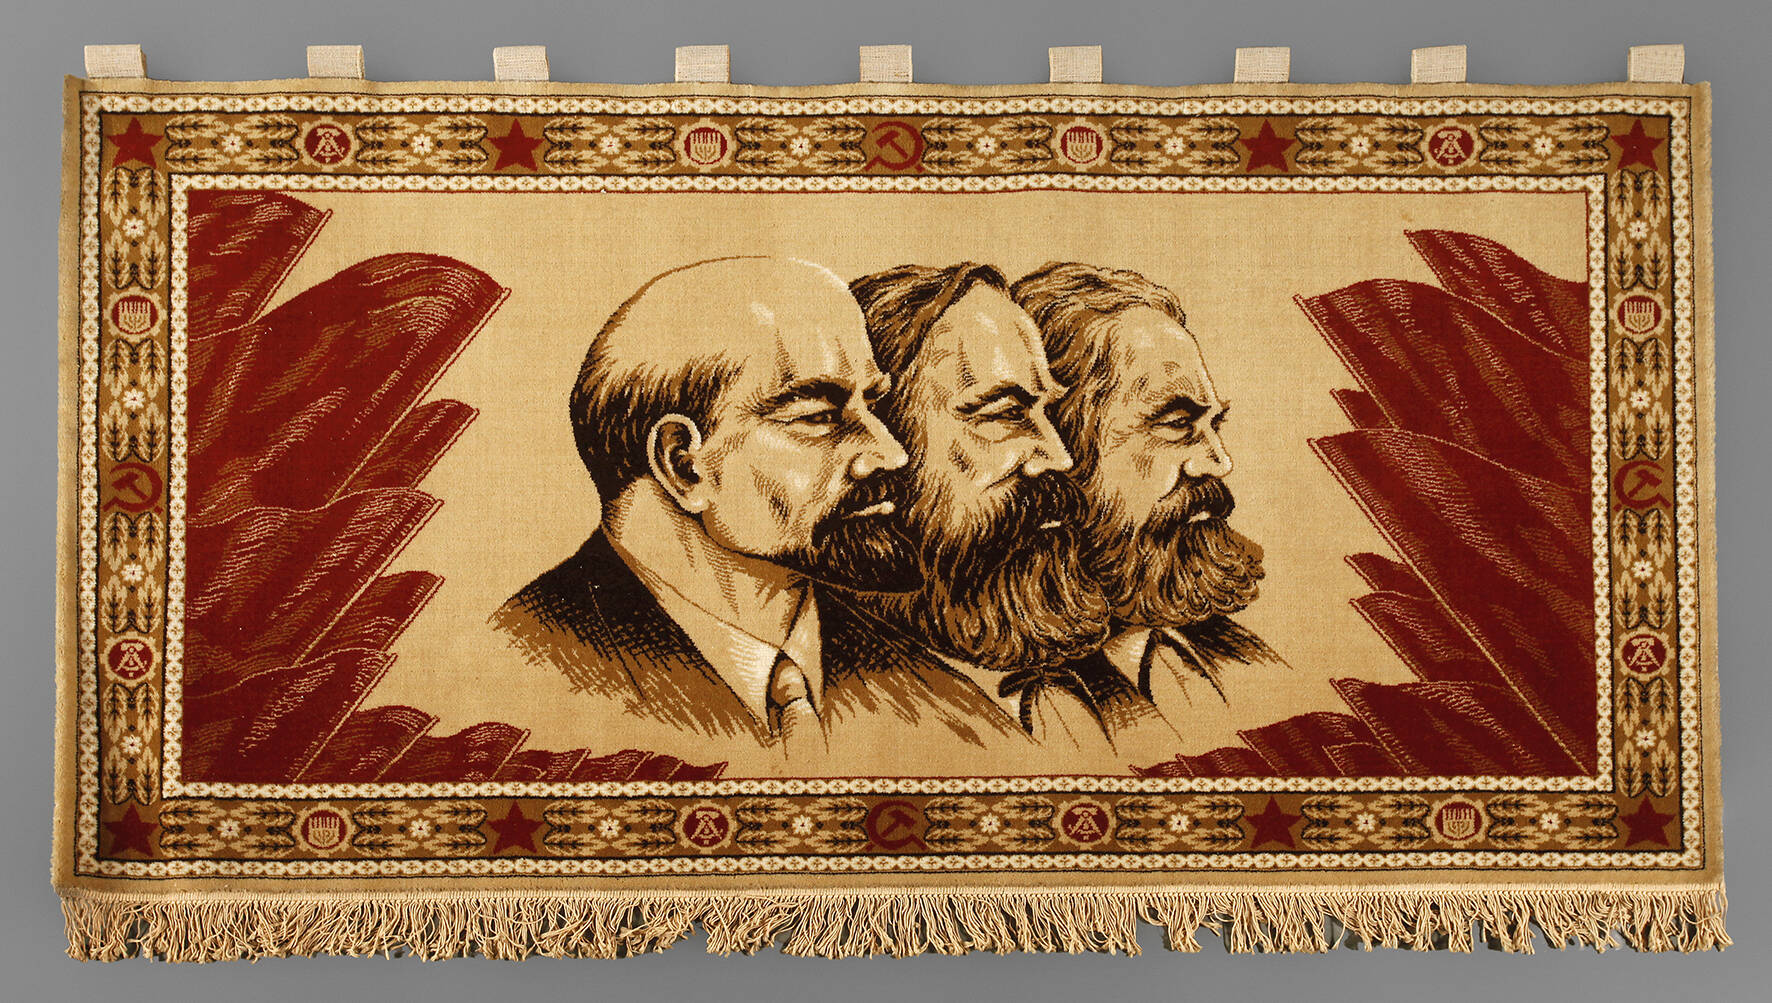 Wandteppich Marx-Engels-Lenin